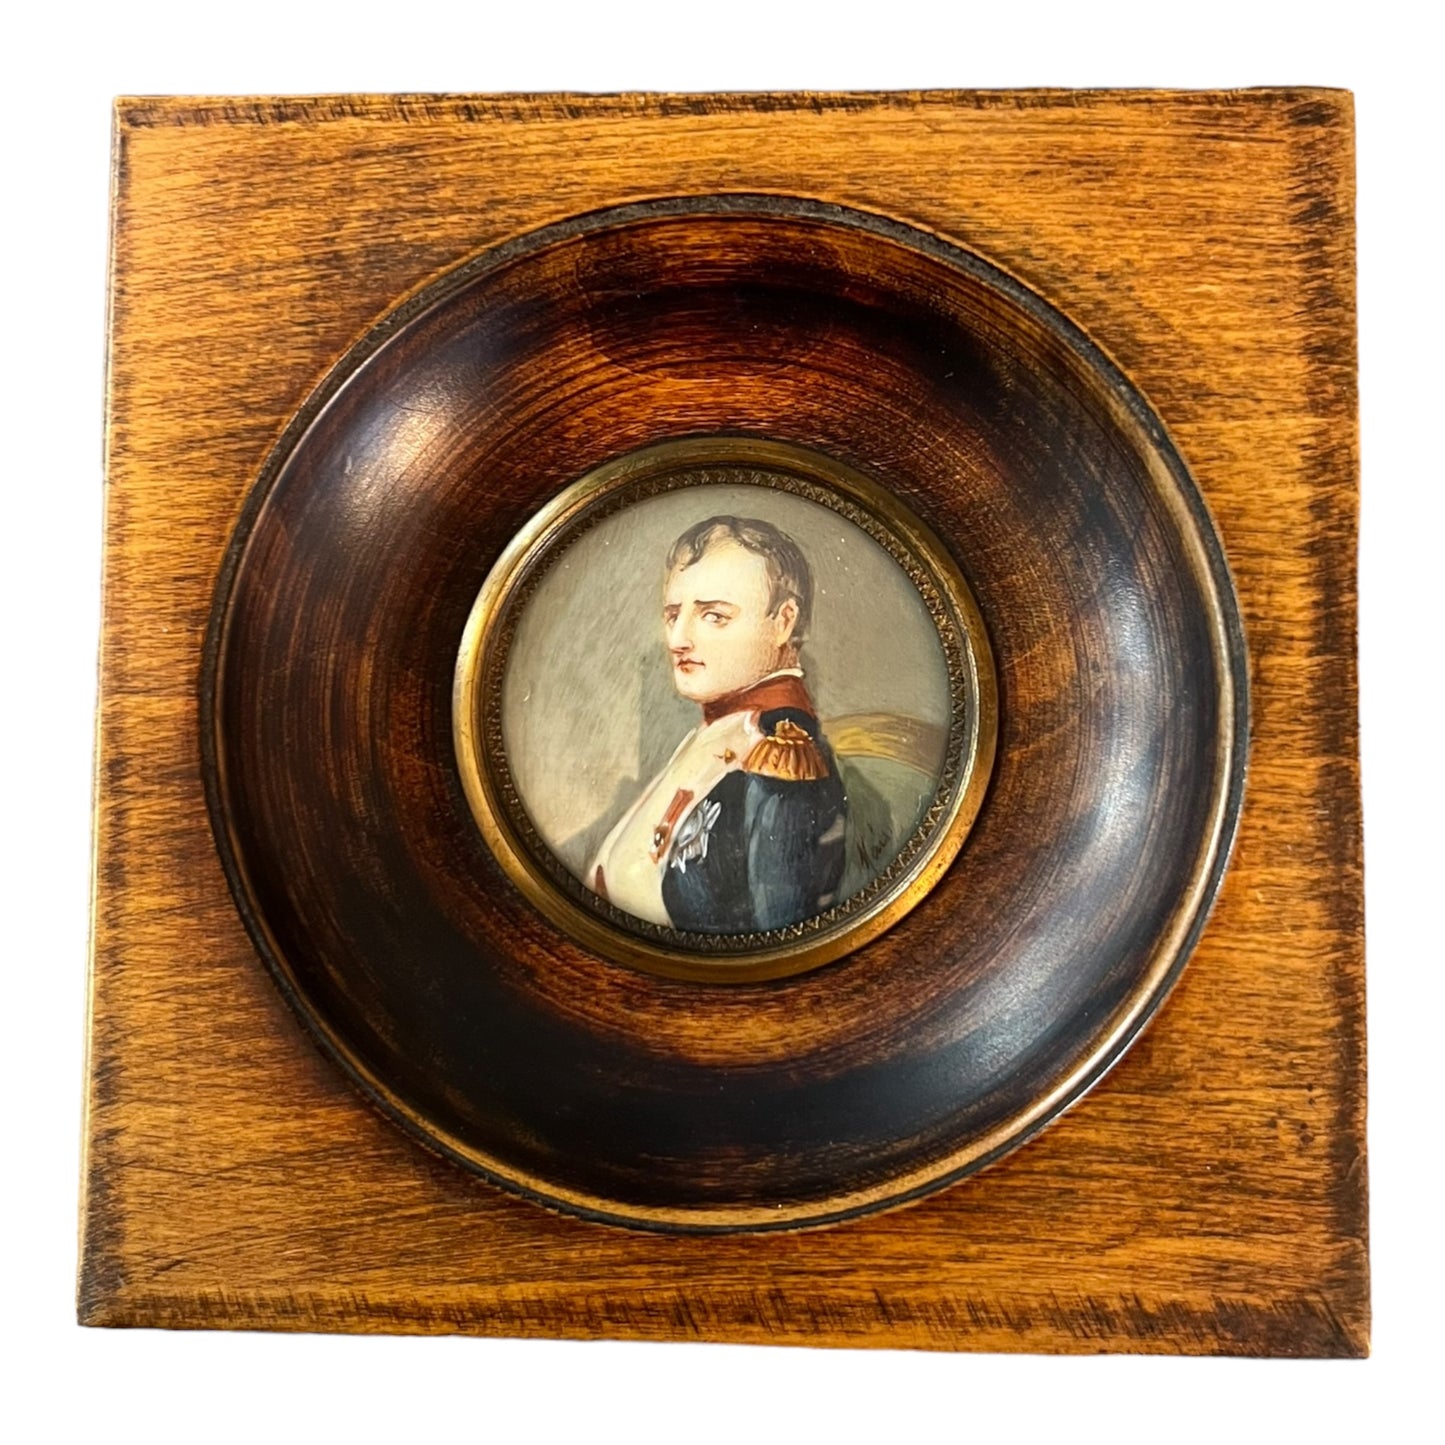 Napoleon miniature portrait on ivory